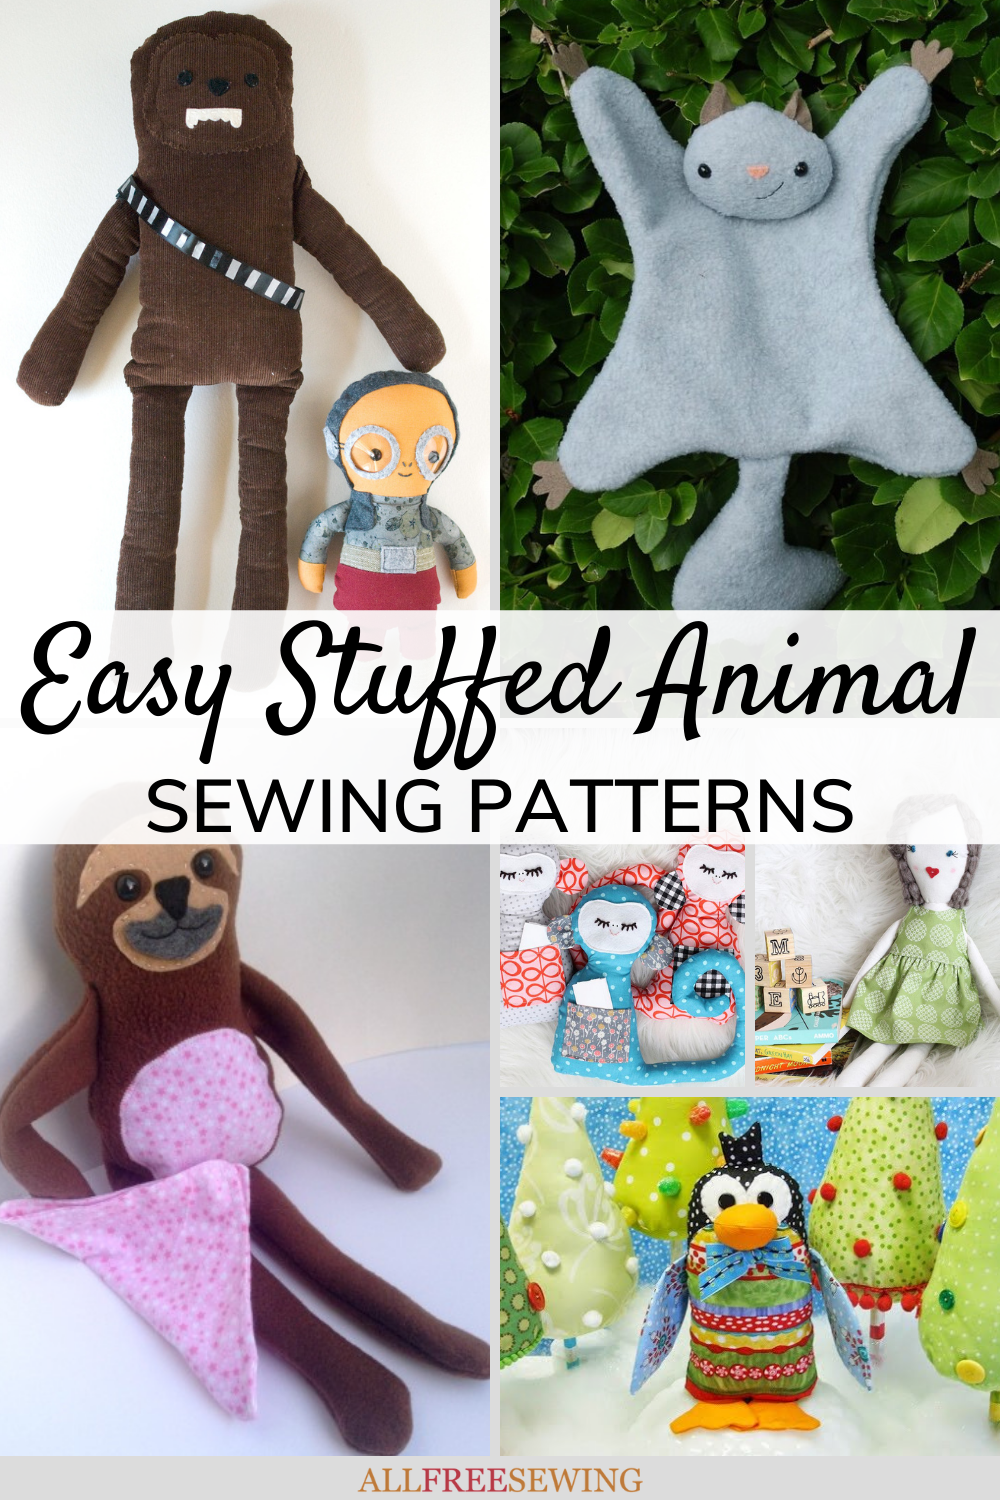 Free Stuffed Animal Patterns - the cutest! - U Create  Stuffed animal  patterns, Sewing stuffed animals, Sewing projects